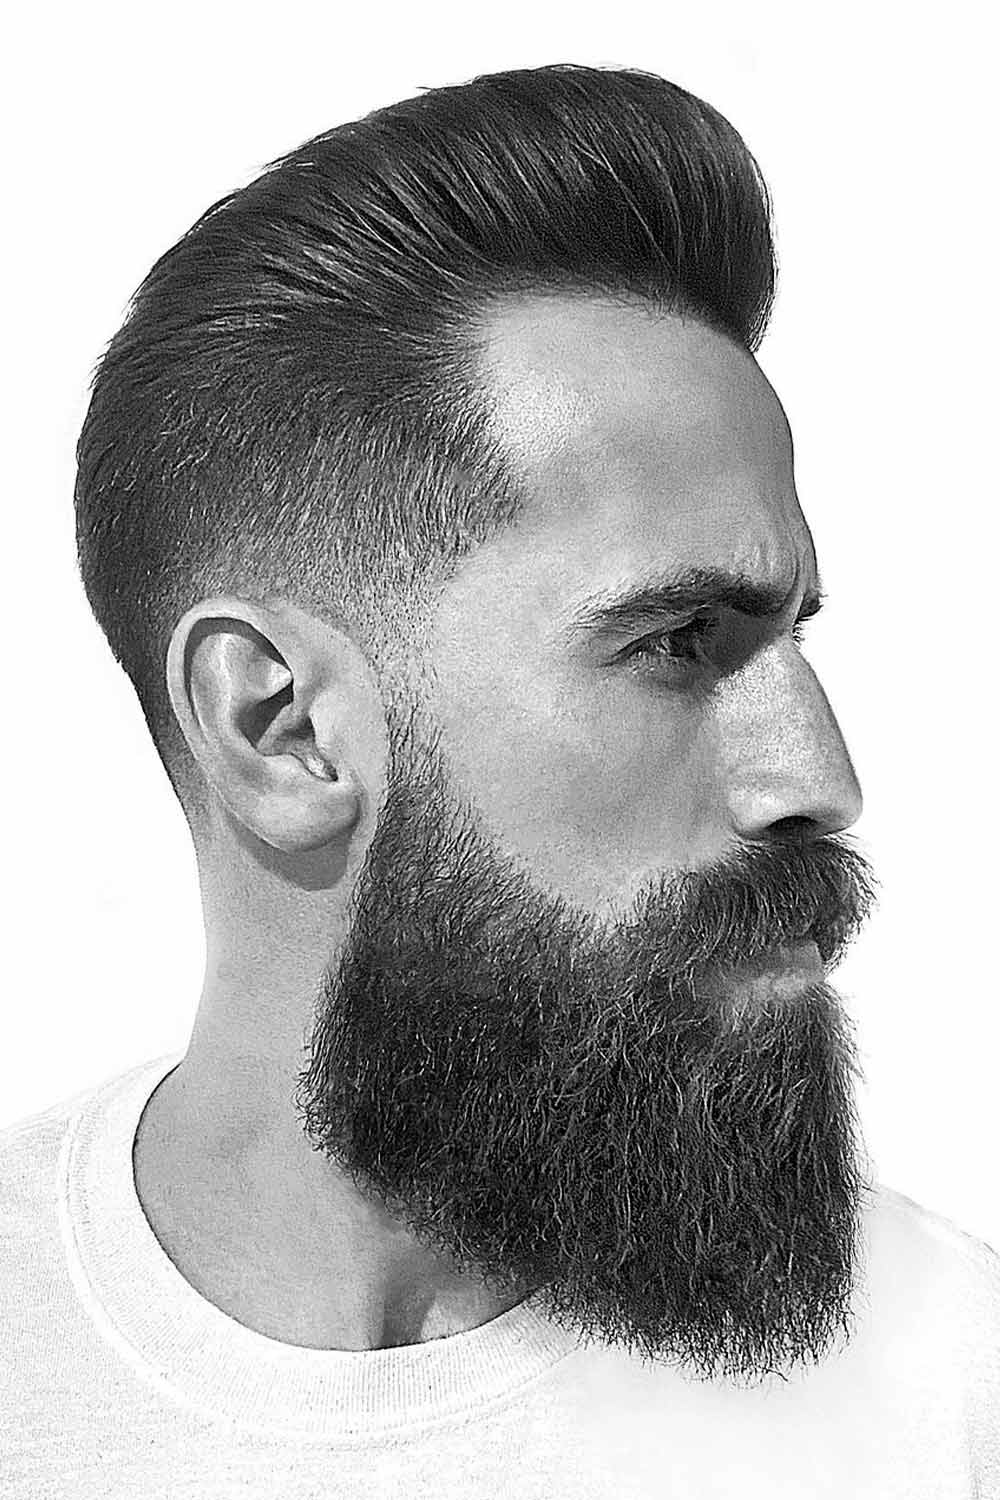 Long Beard #beard #beardstyles #beardtypes #mensbeards